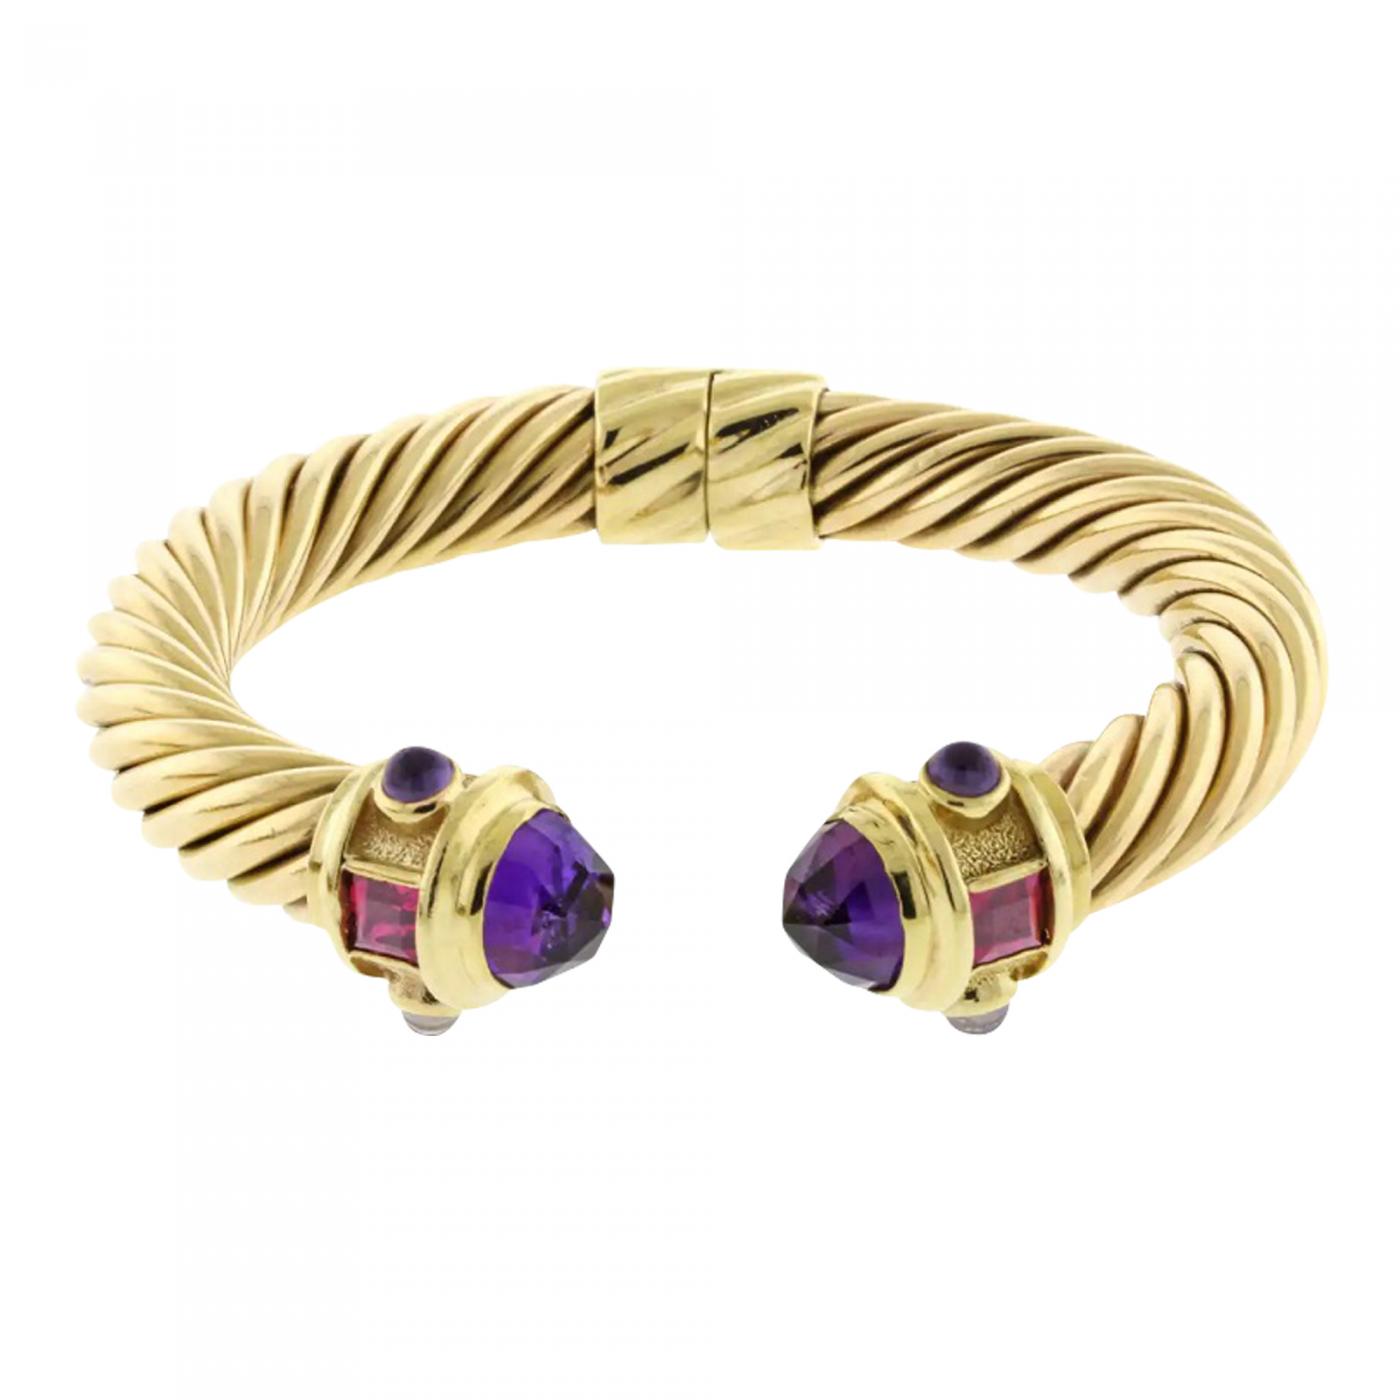 Buy David Yurman Gold bracelets online  62 products  FASHIOLAin